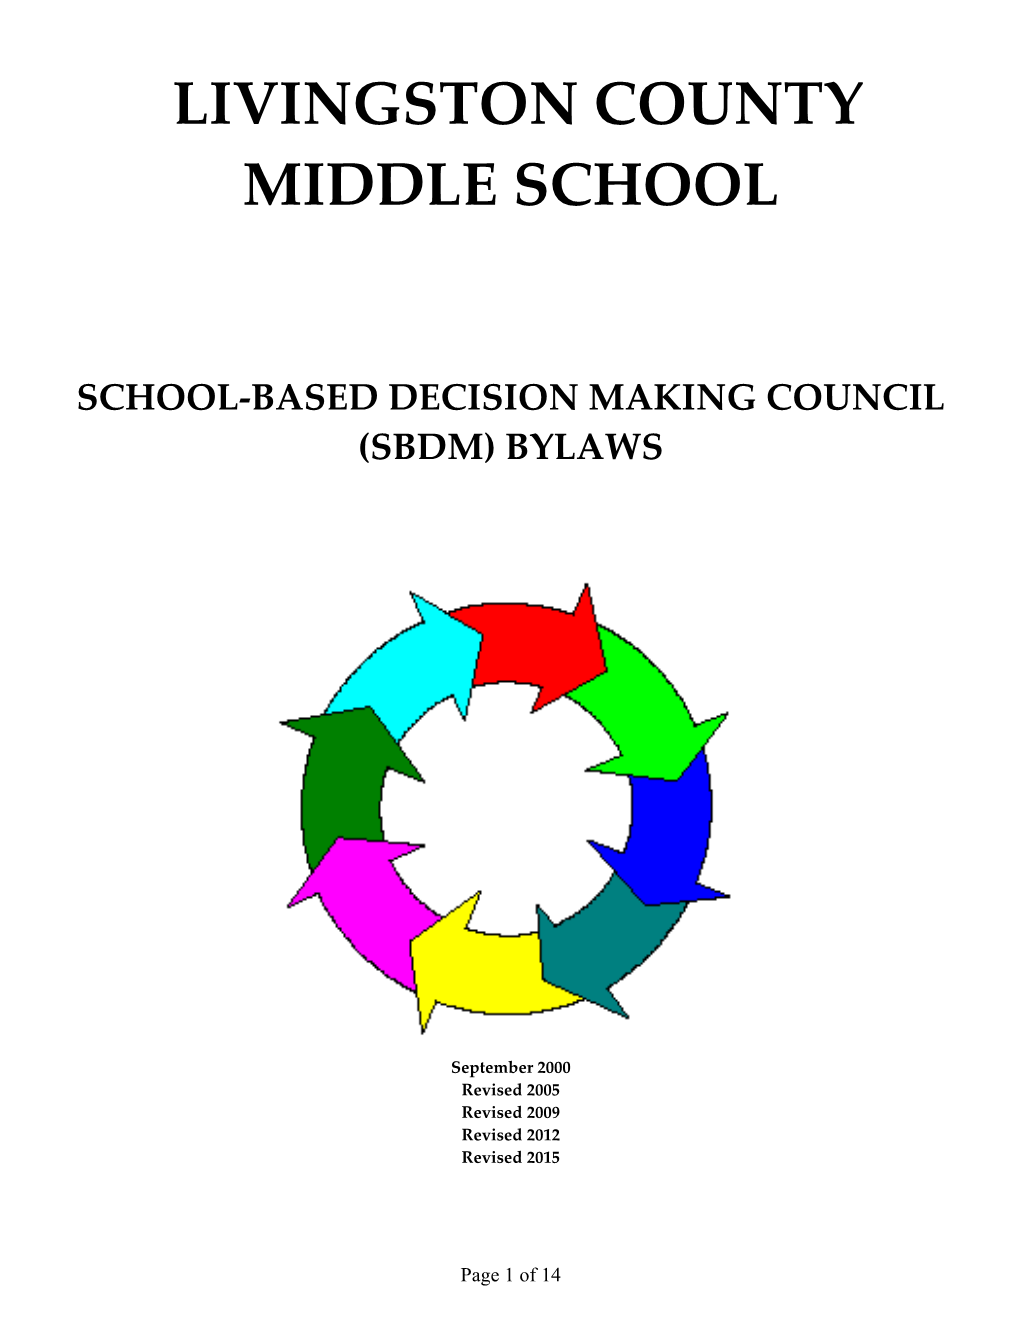 School-Based Decision Makingcouncil (Sbdm) Bylaws